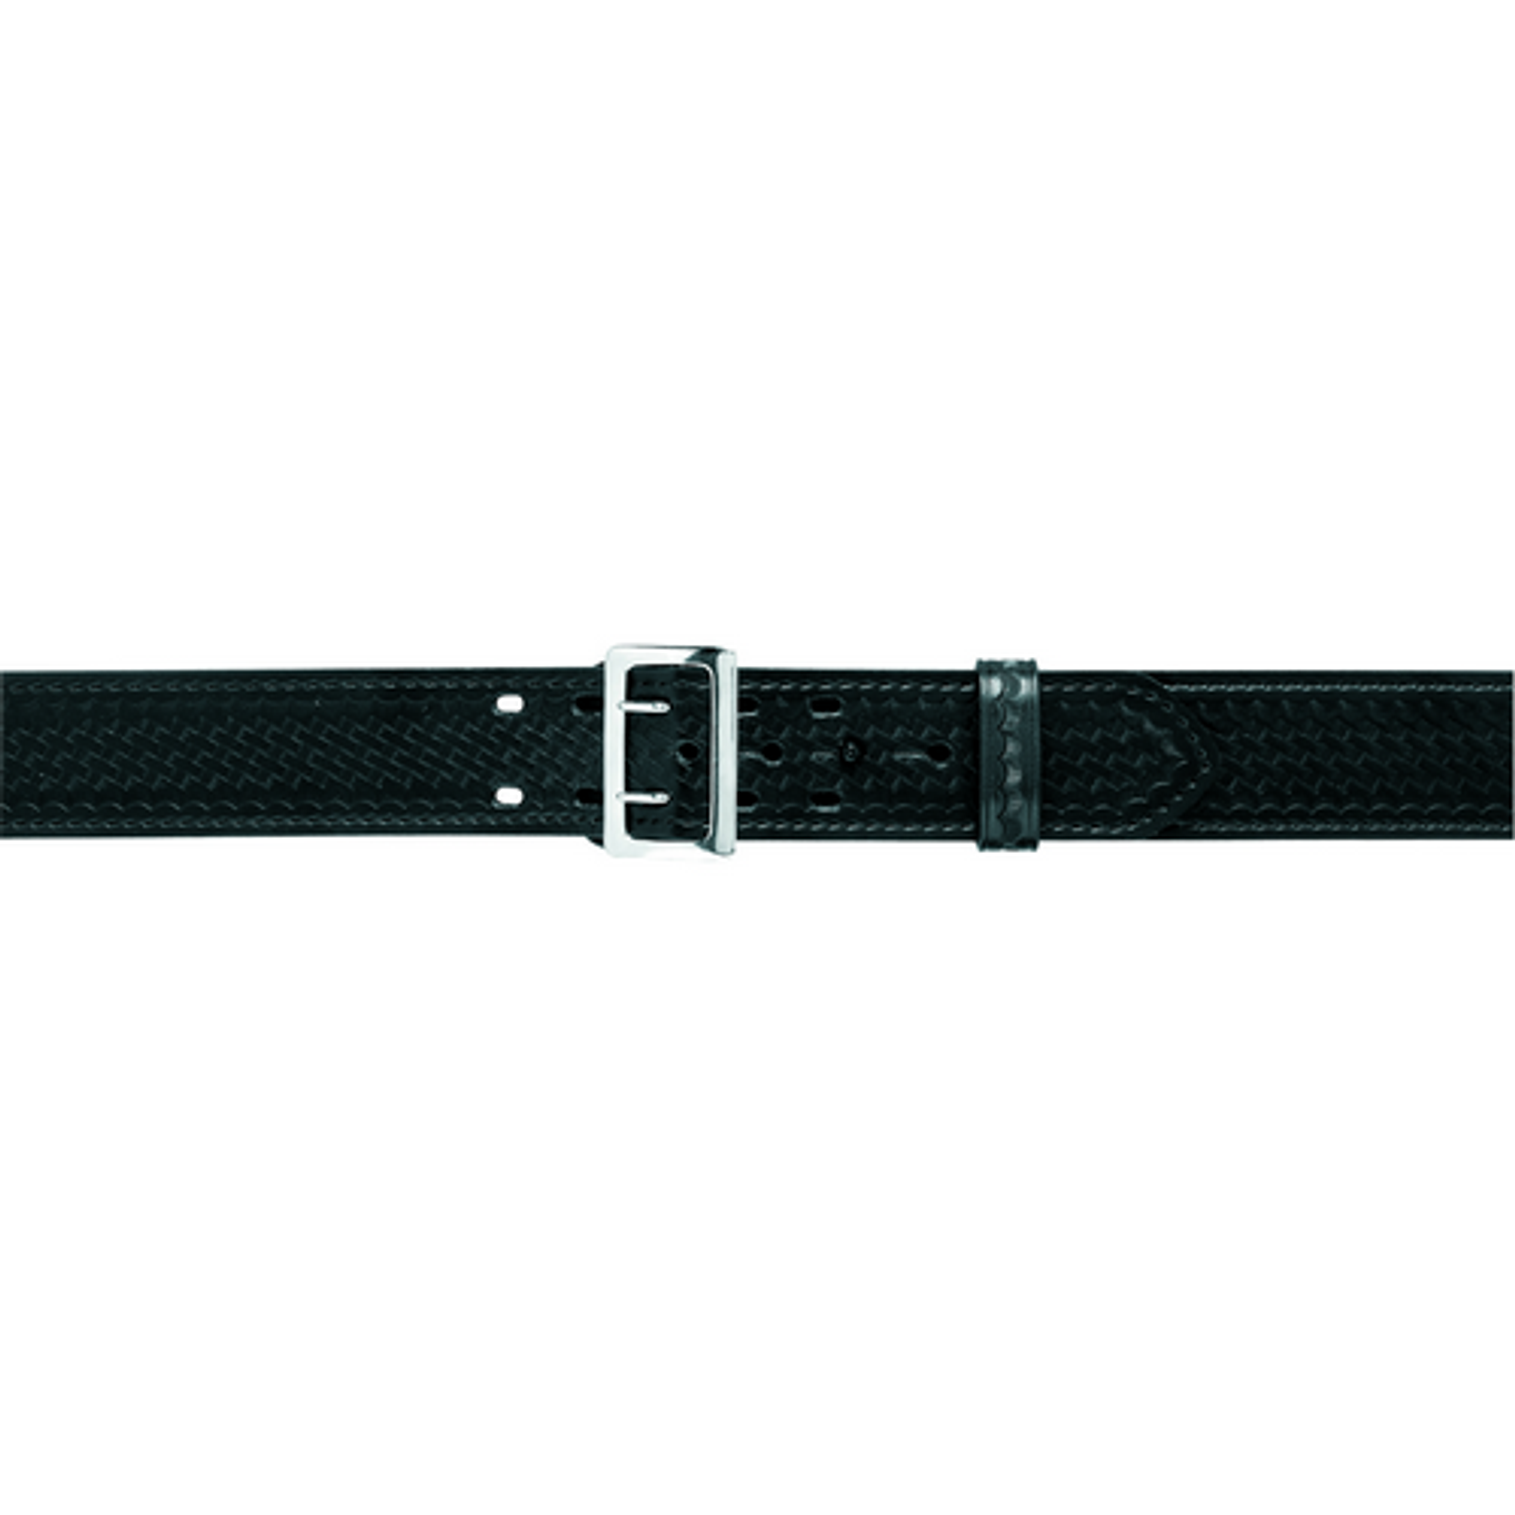 87 - Sam Browne Buckled Duty Belt, 2.25 (58mm) - KR87-38-6B